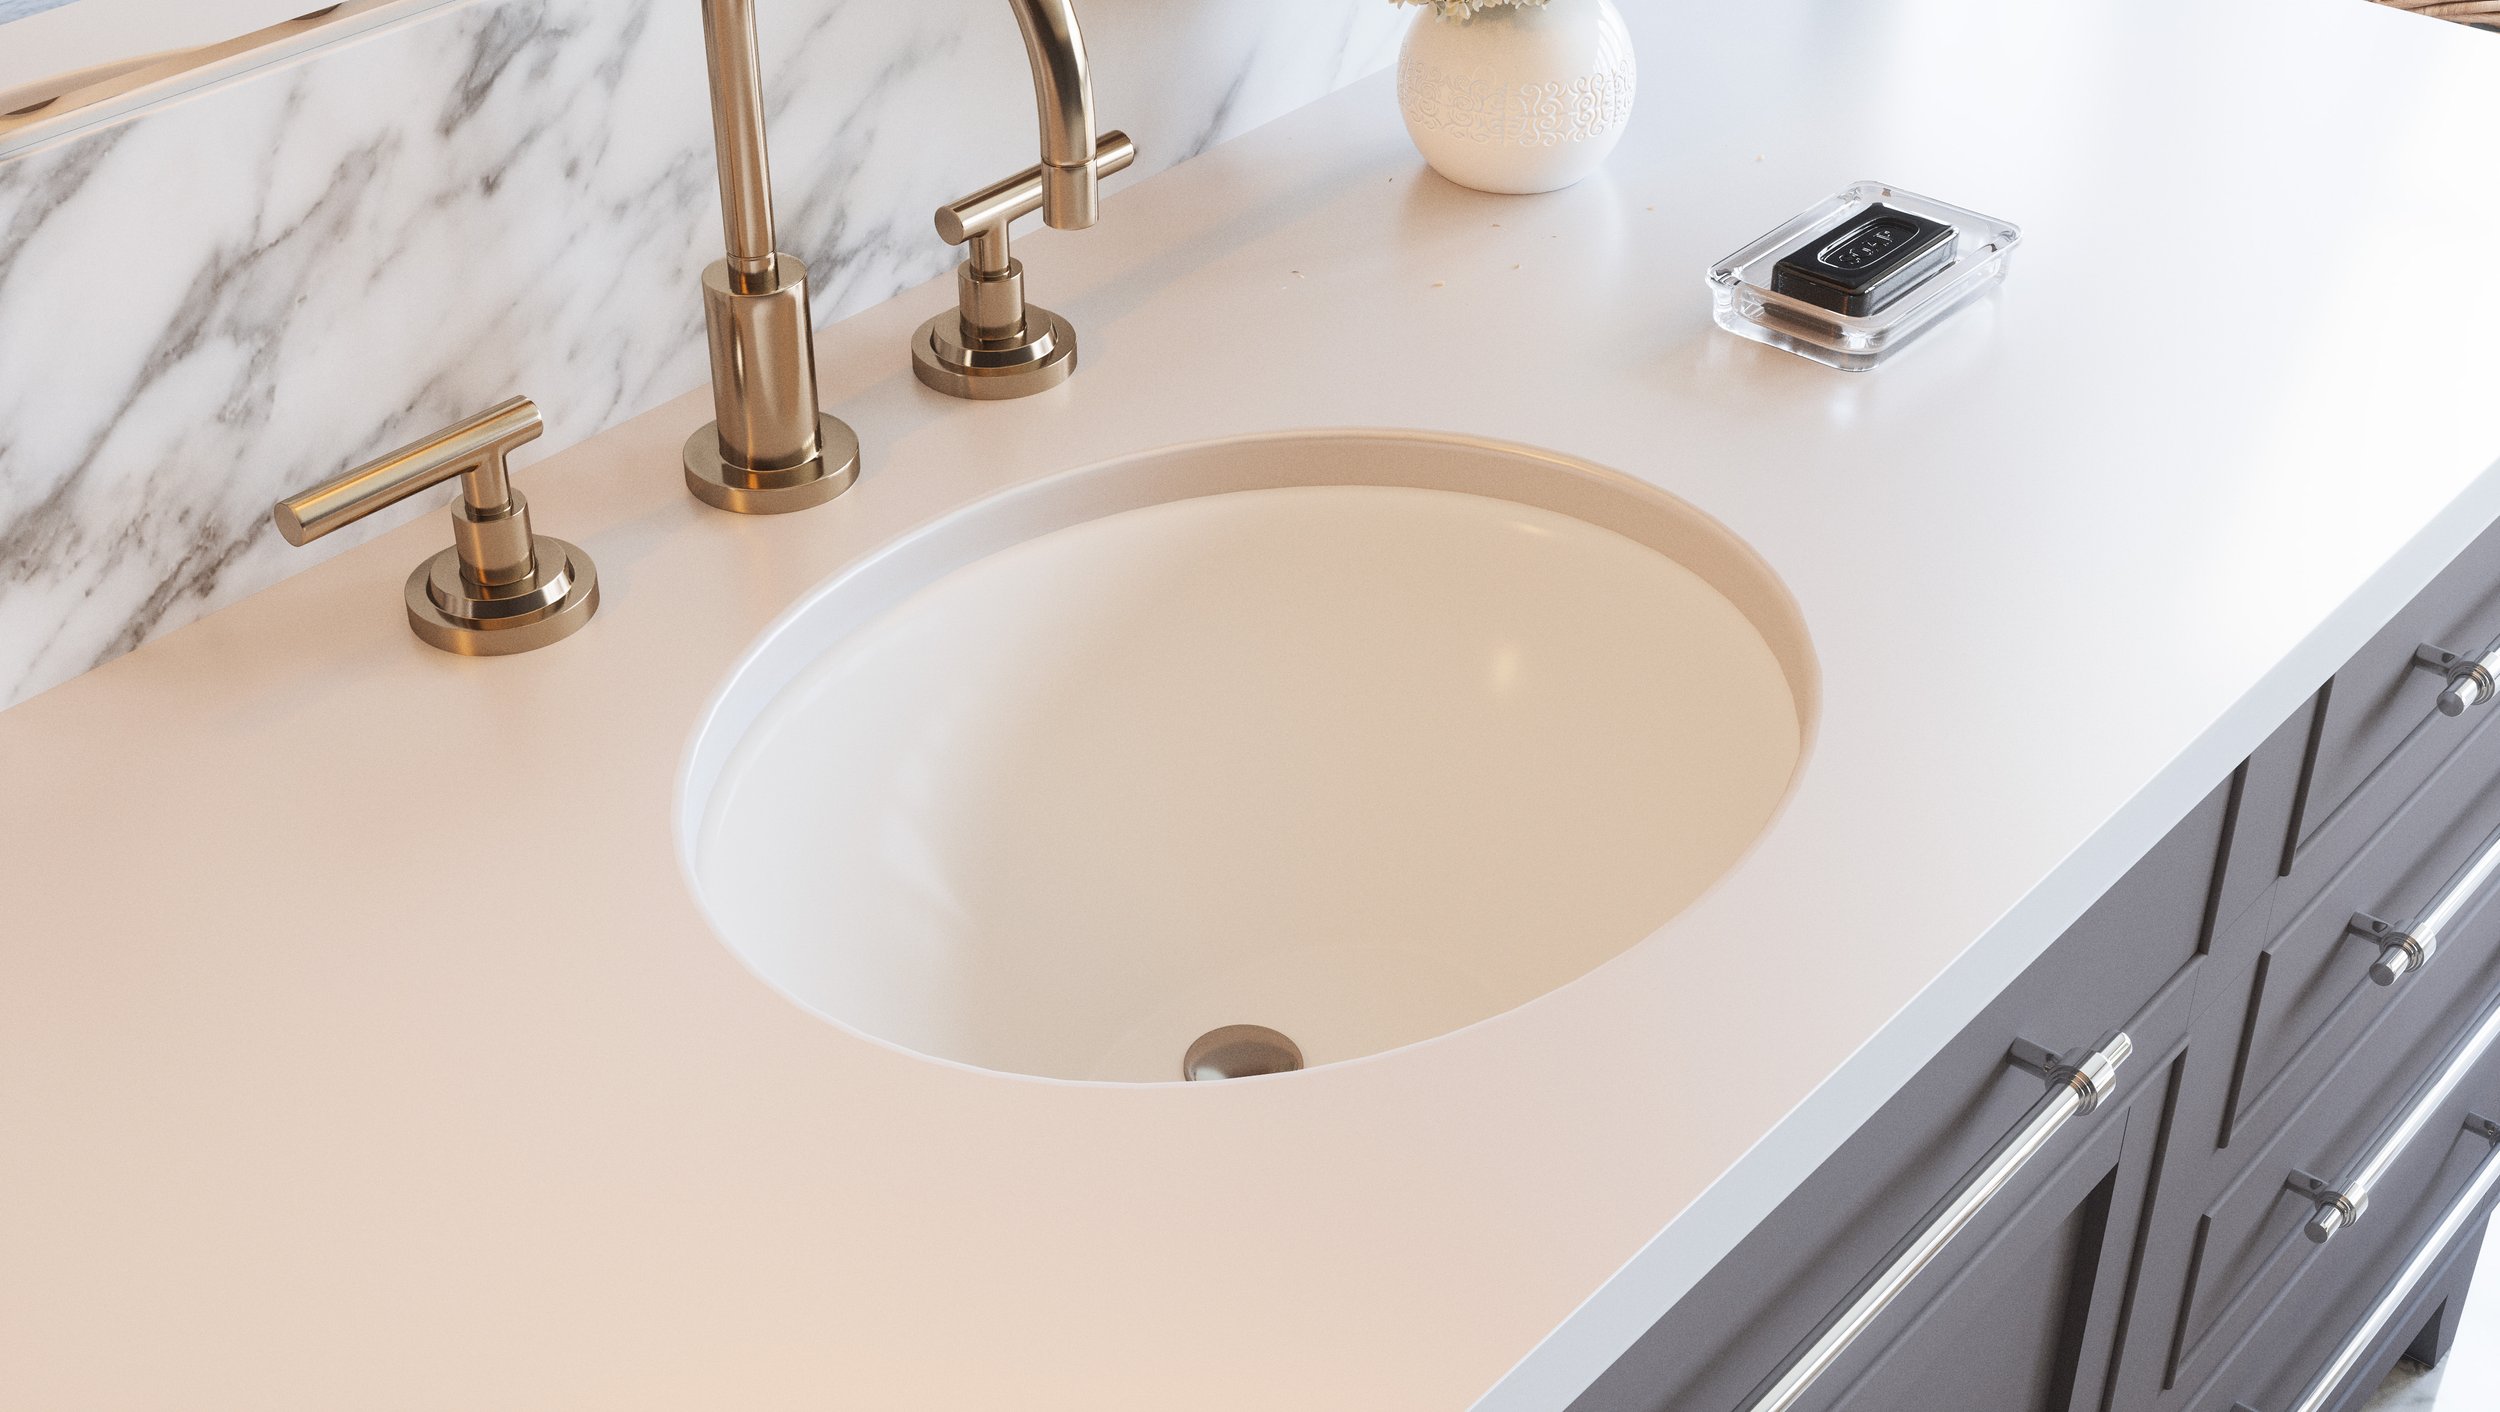 Newcastle PWL1001 - 20 in. Undermount Ceramic Oval Bathroom Sink in White